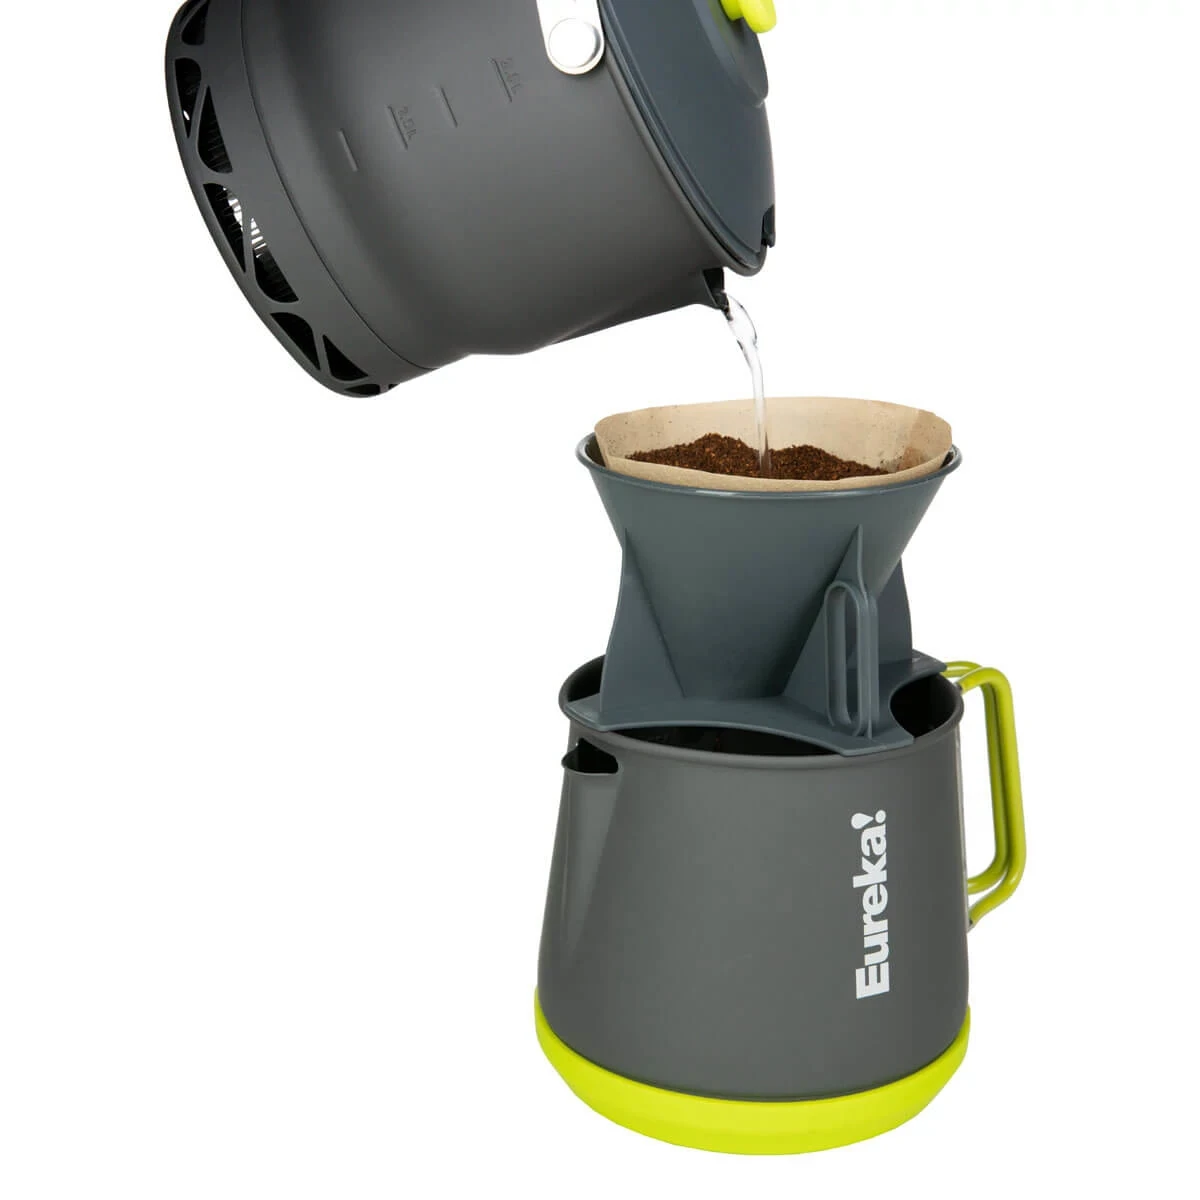 Camp Café coffee carafe and pour over filter holder